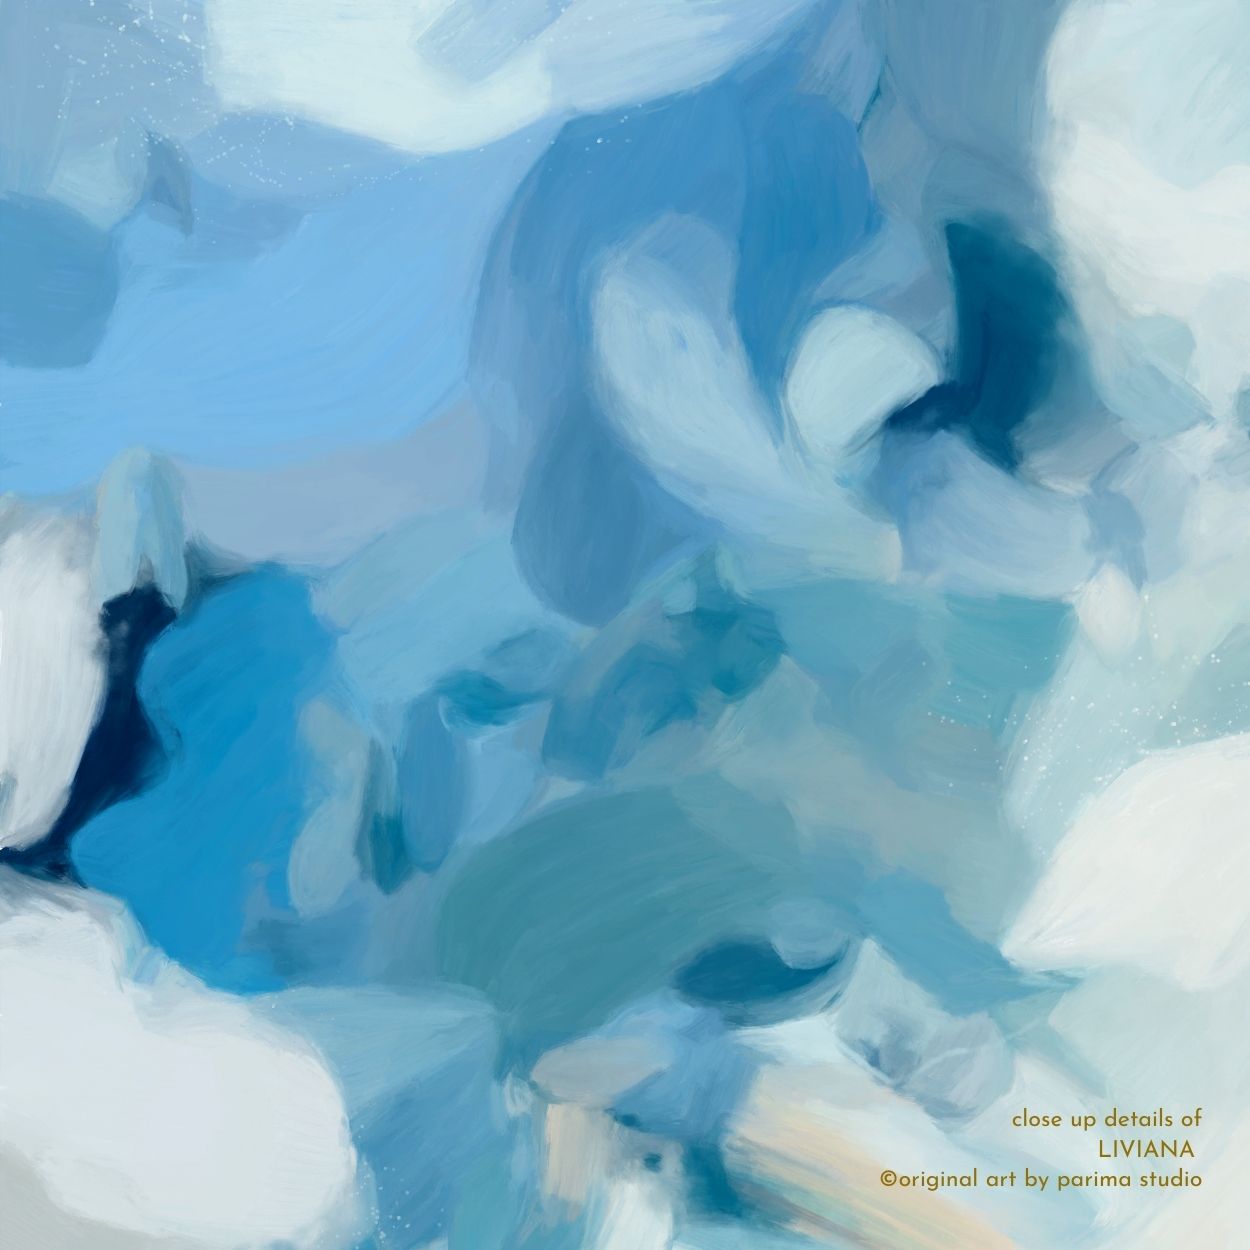 Close up of Liviana, blue colorful horizontal abstract wall art print by Parima Studio